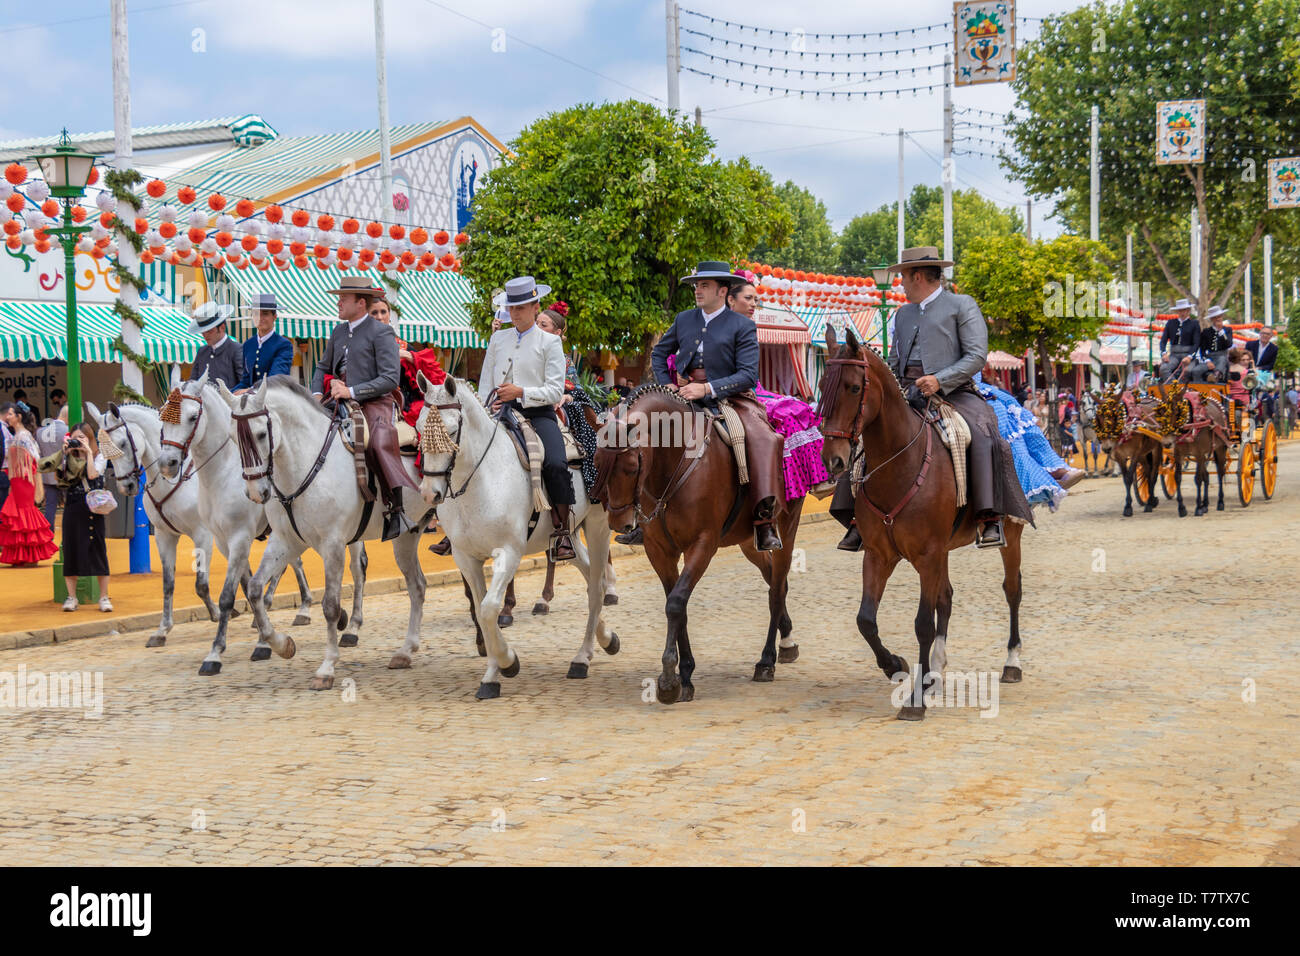 Seville, Spain - May 5, 2019: People riding horses and celebrating Seville's April Fair, Seville Fair (Feria de Sevilla). The Seville April Fair on Ma Stock Photo